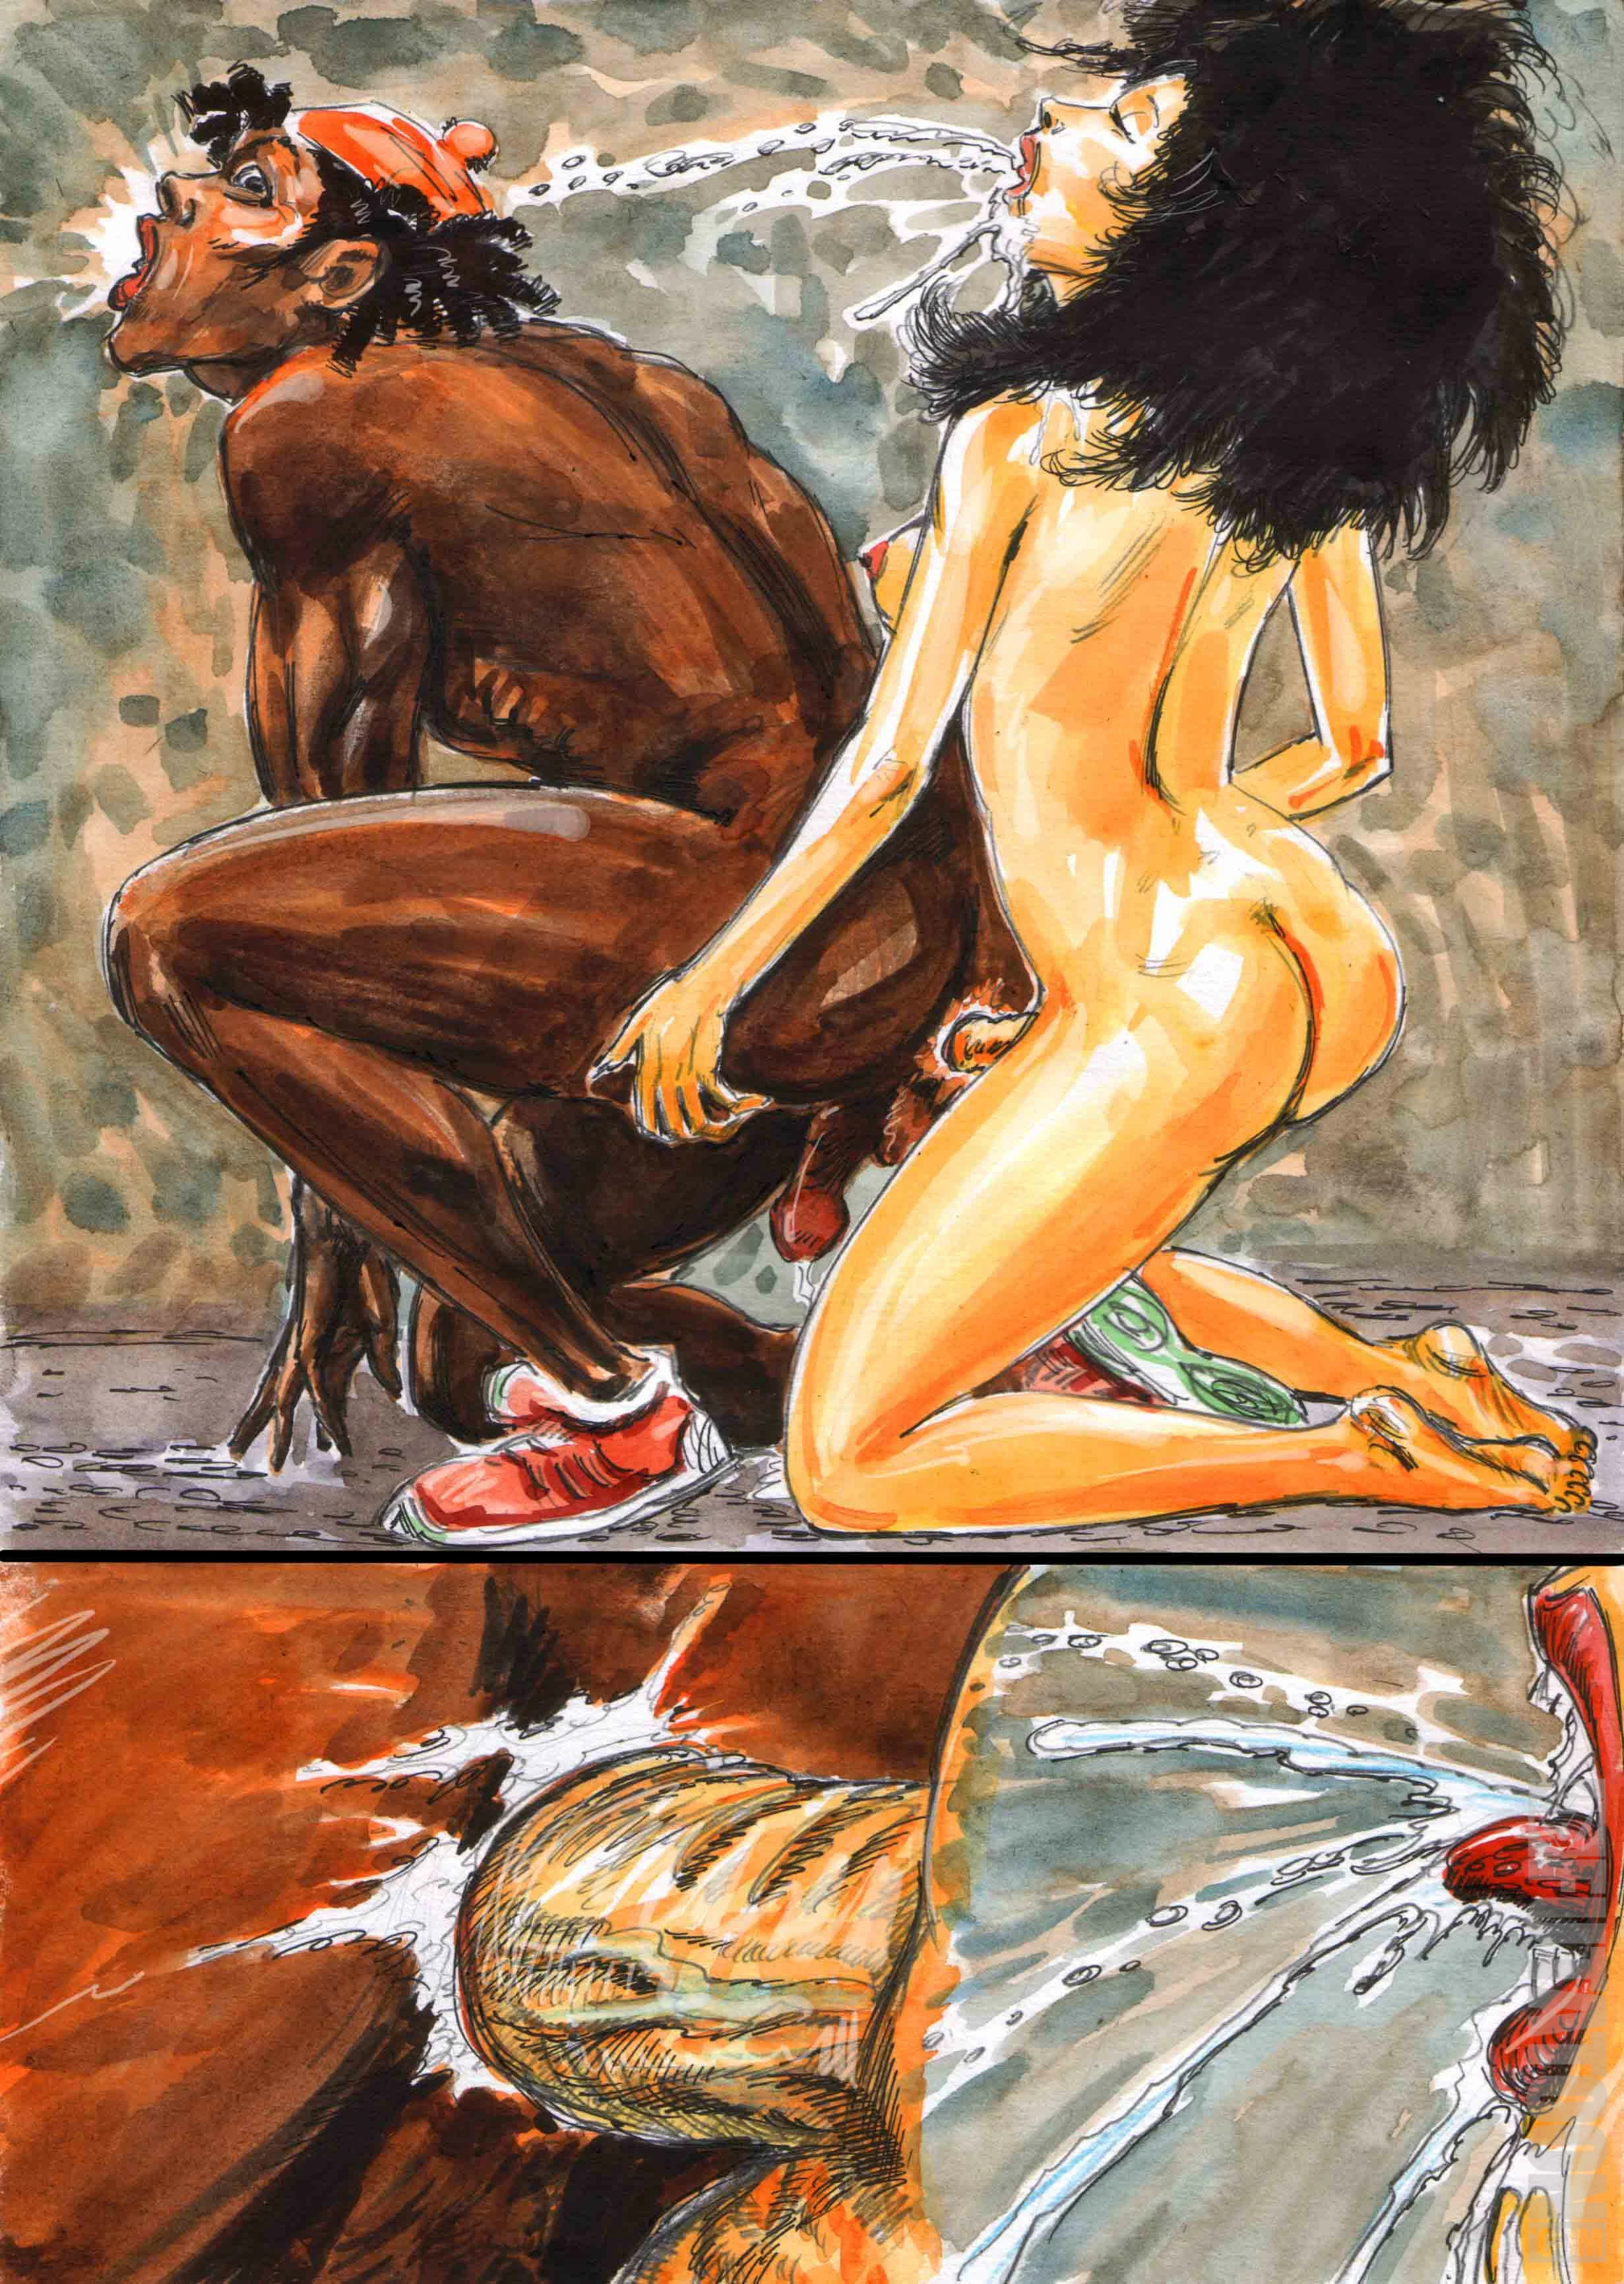 interracial shemale porn comics anal sex